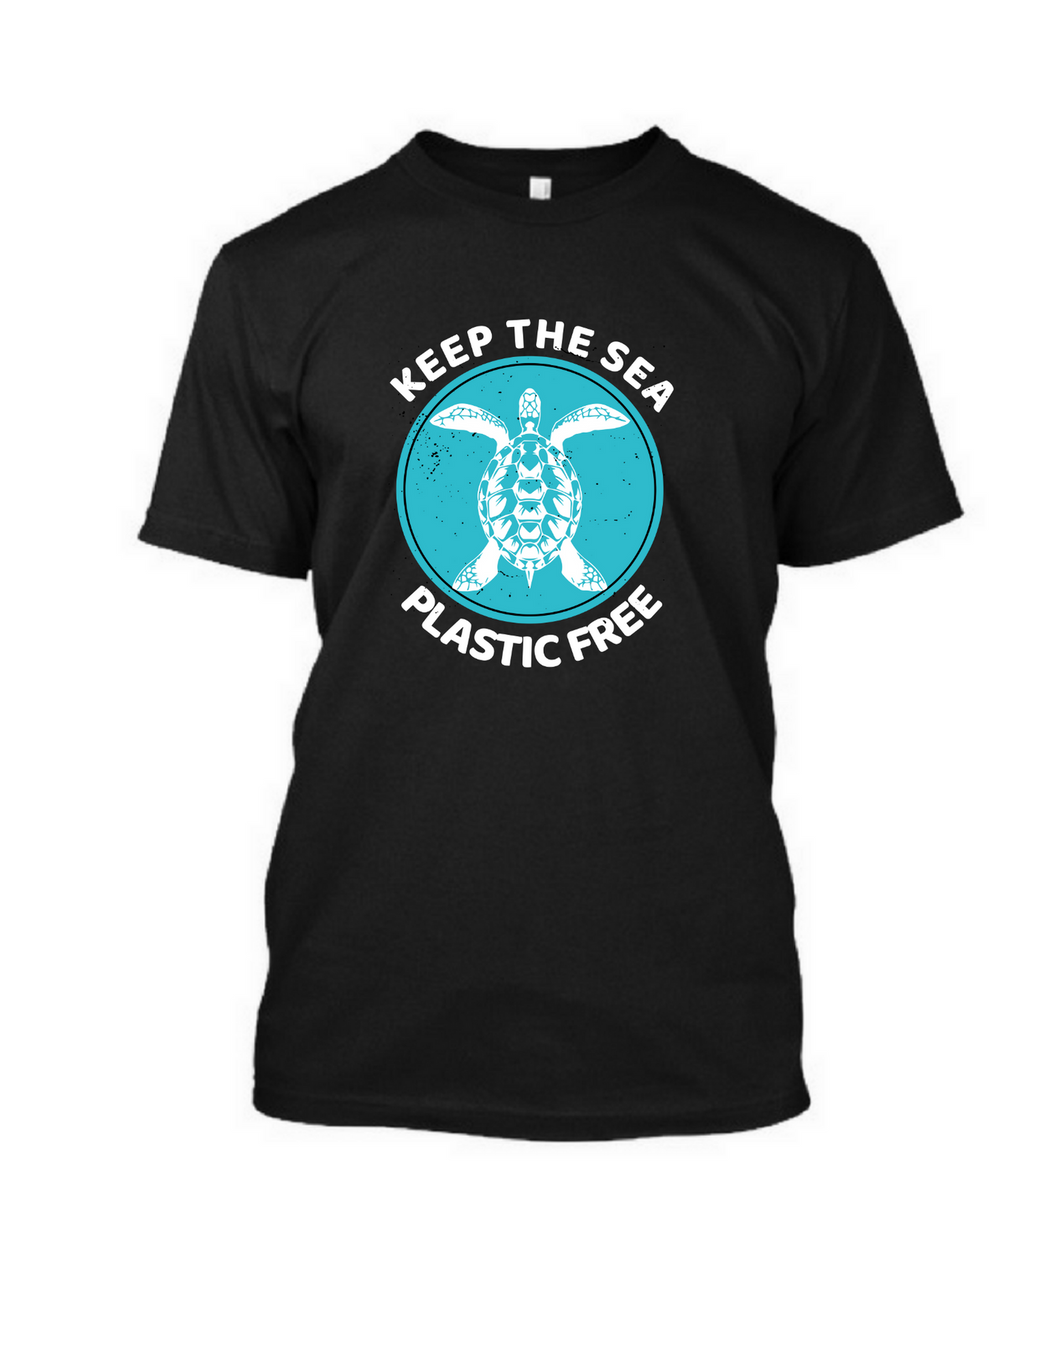 Keep the sea plastic free - Men's Half sleeve round neck T-Shirt